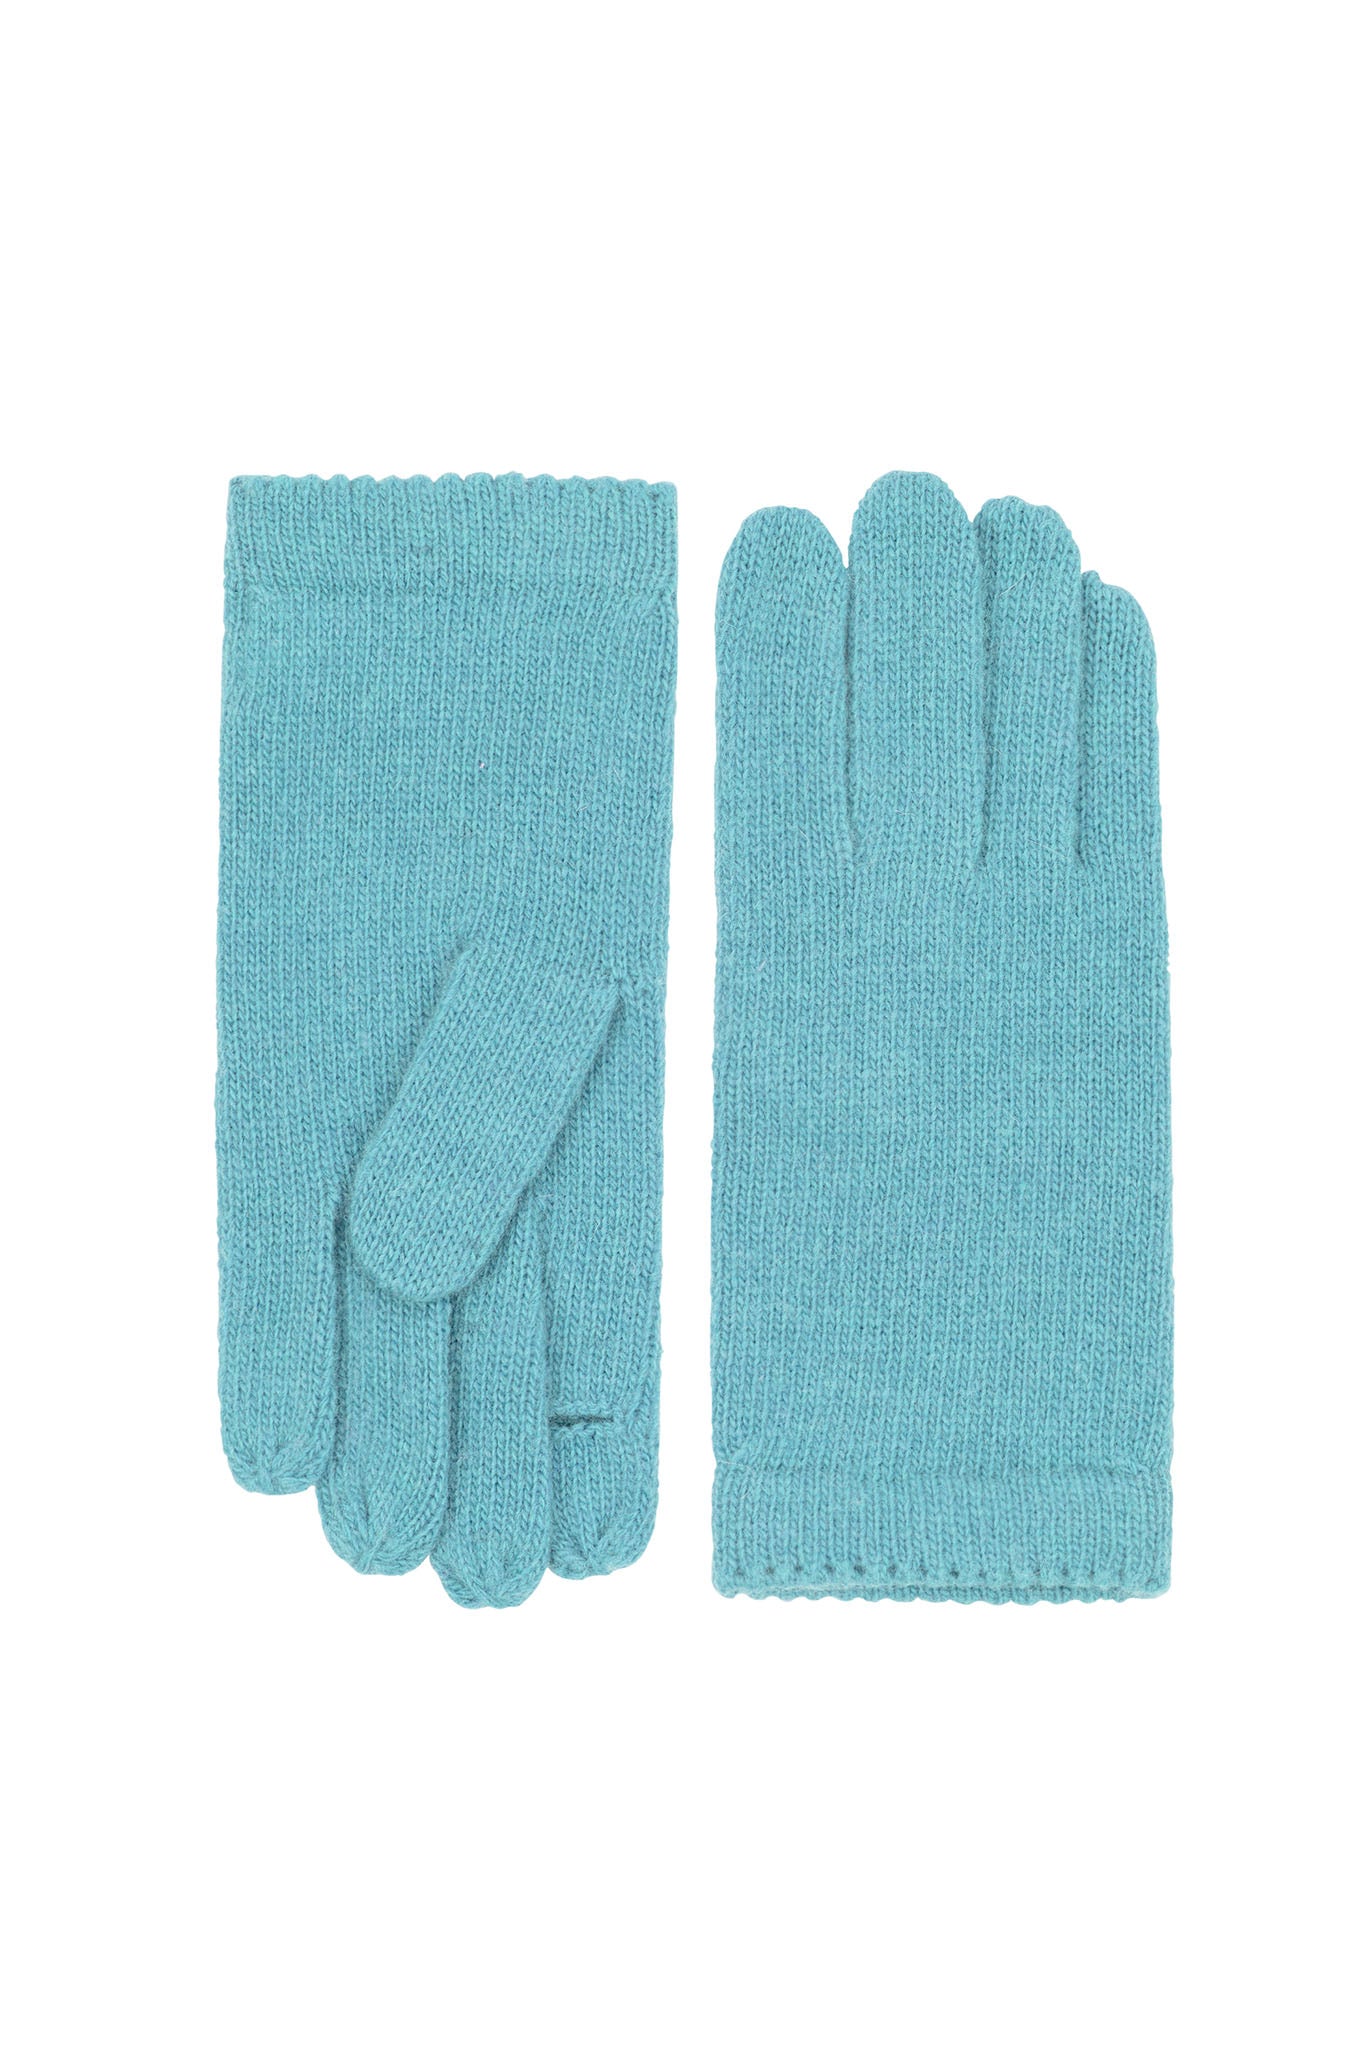 Amato Classic Knit Glove - Aqua